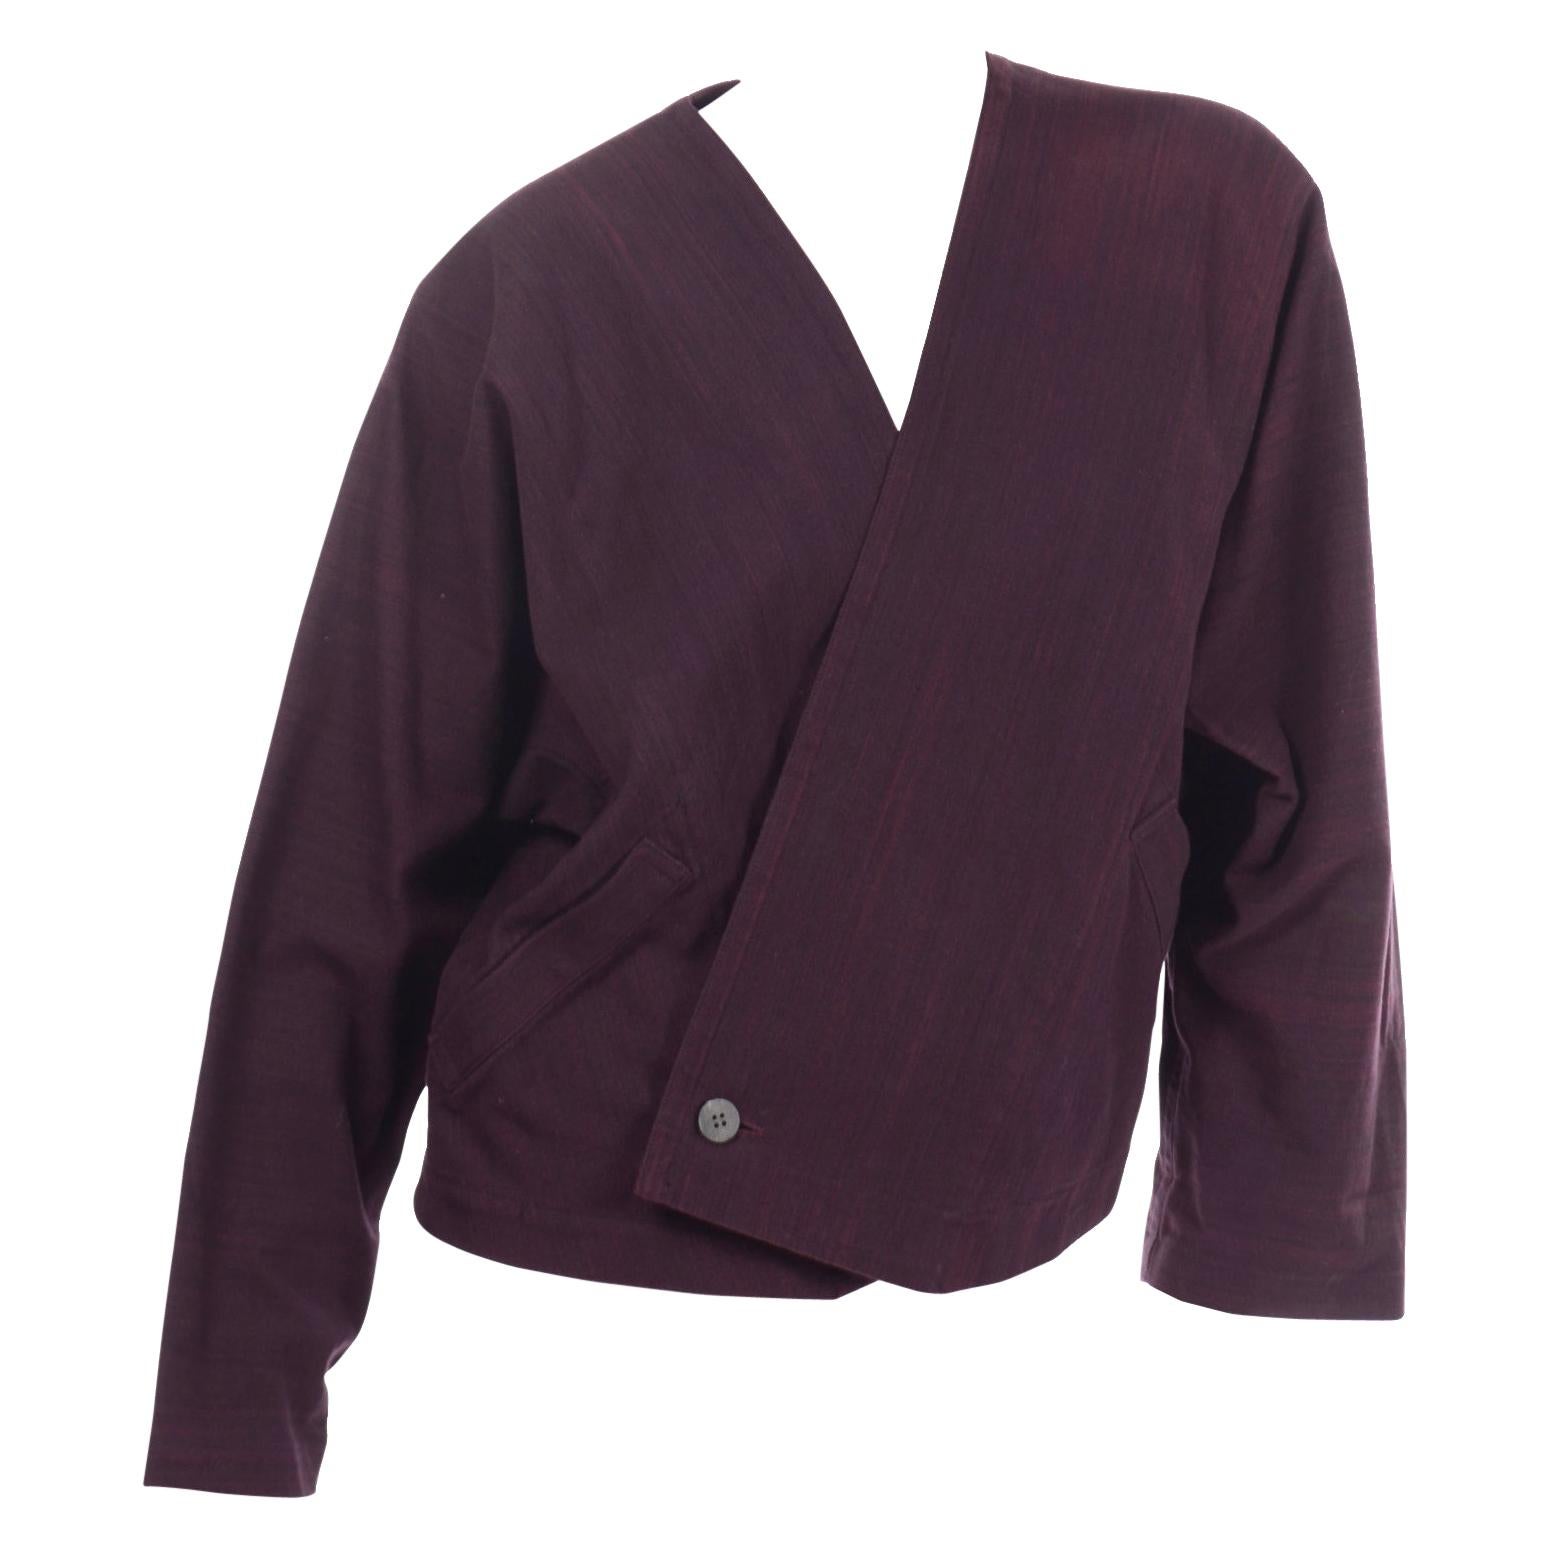 Issey Miyake 1980s Vintage Jacket in Purple Cotton Kimono Style Japan